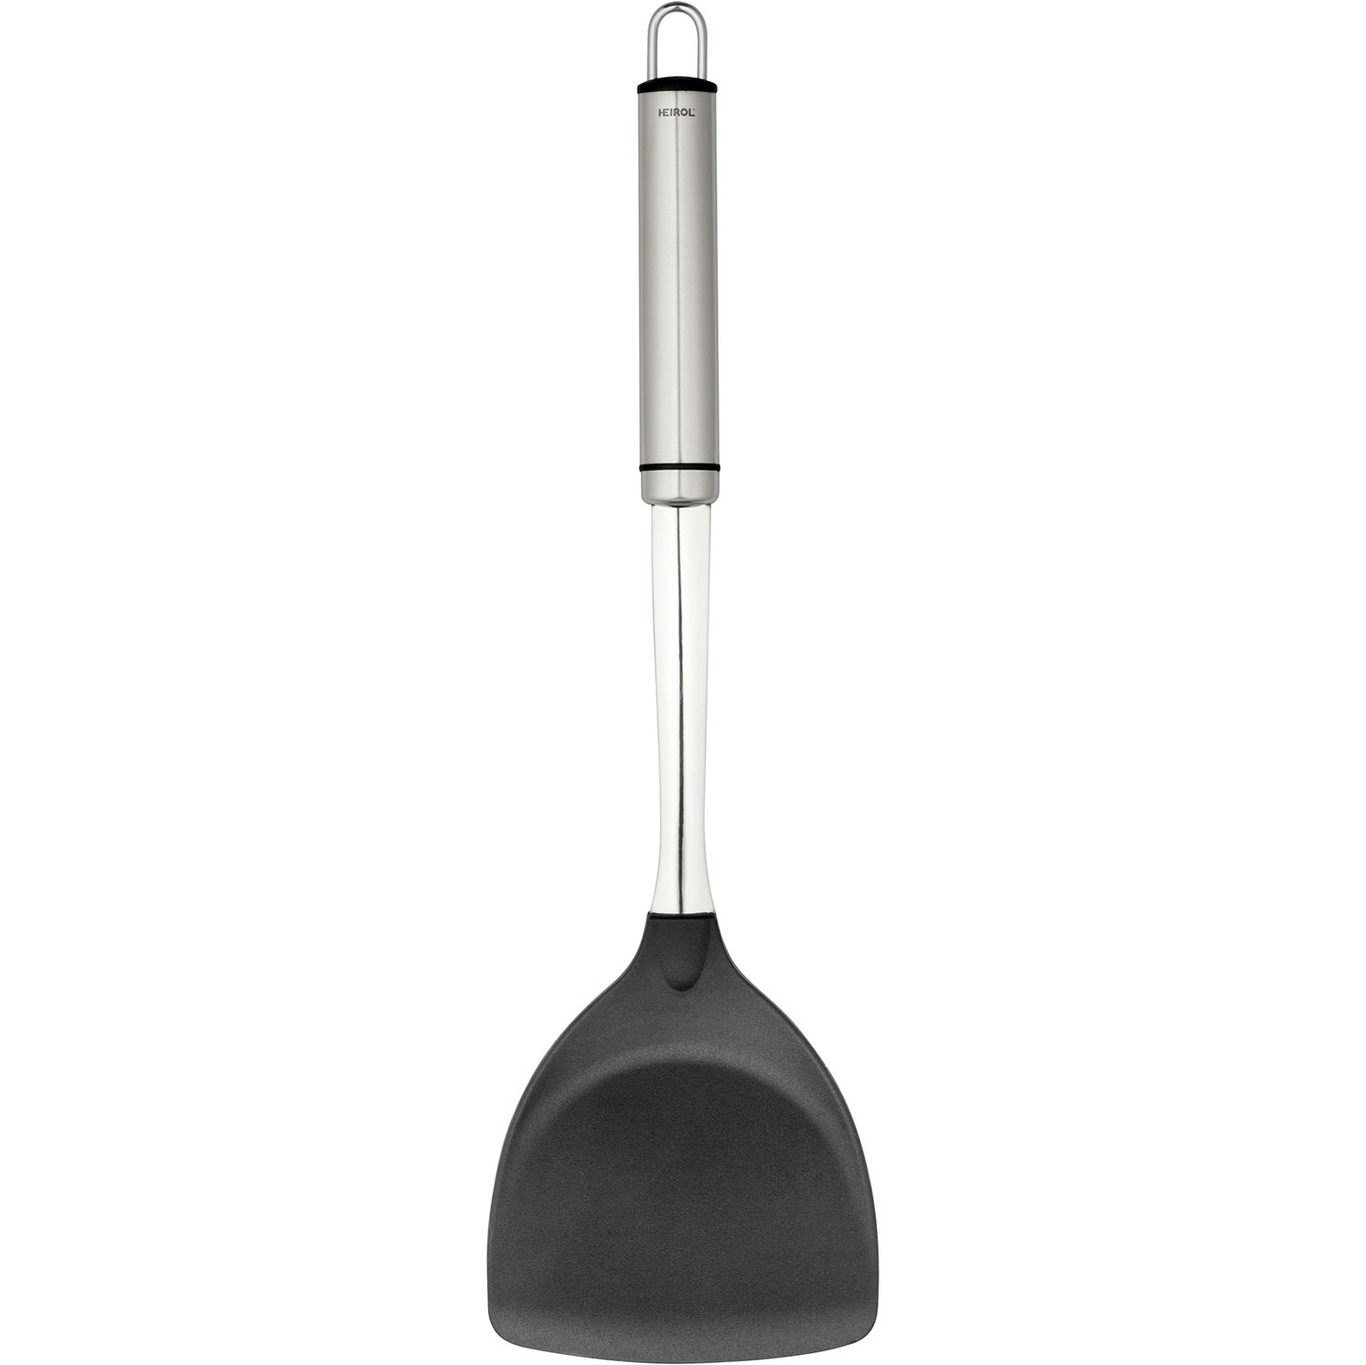 https://royaldesign.com/image/2/heirol-steely-extra-wide-spatula-0?w=800&quality=80